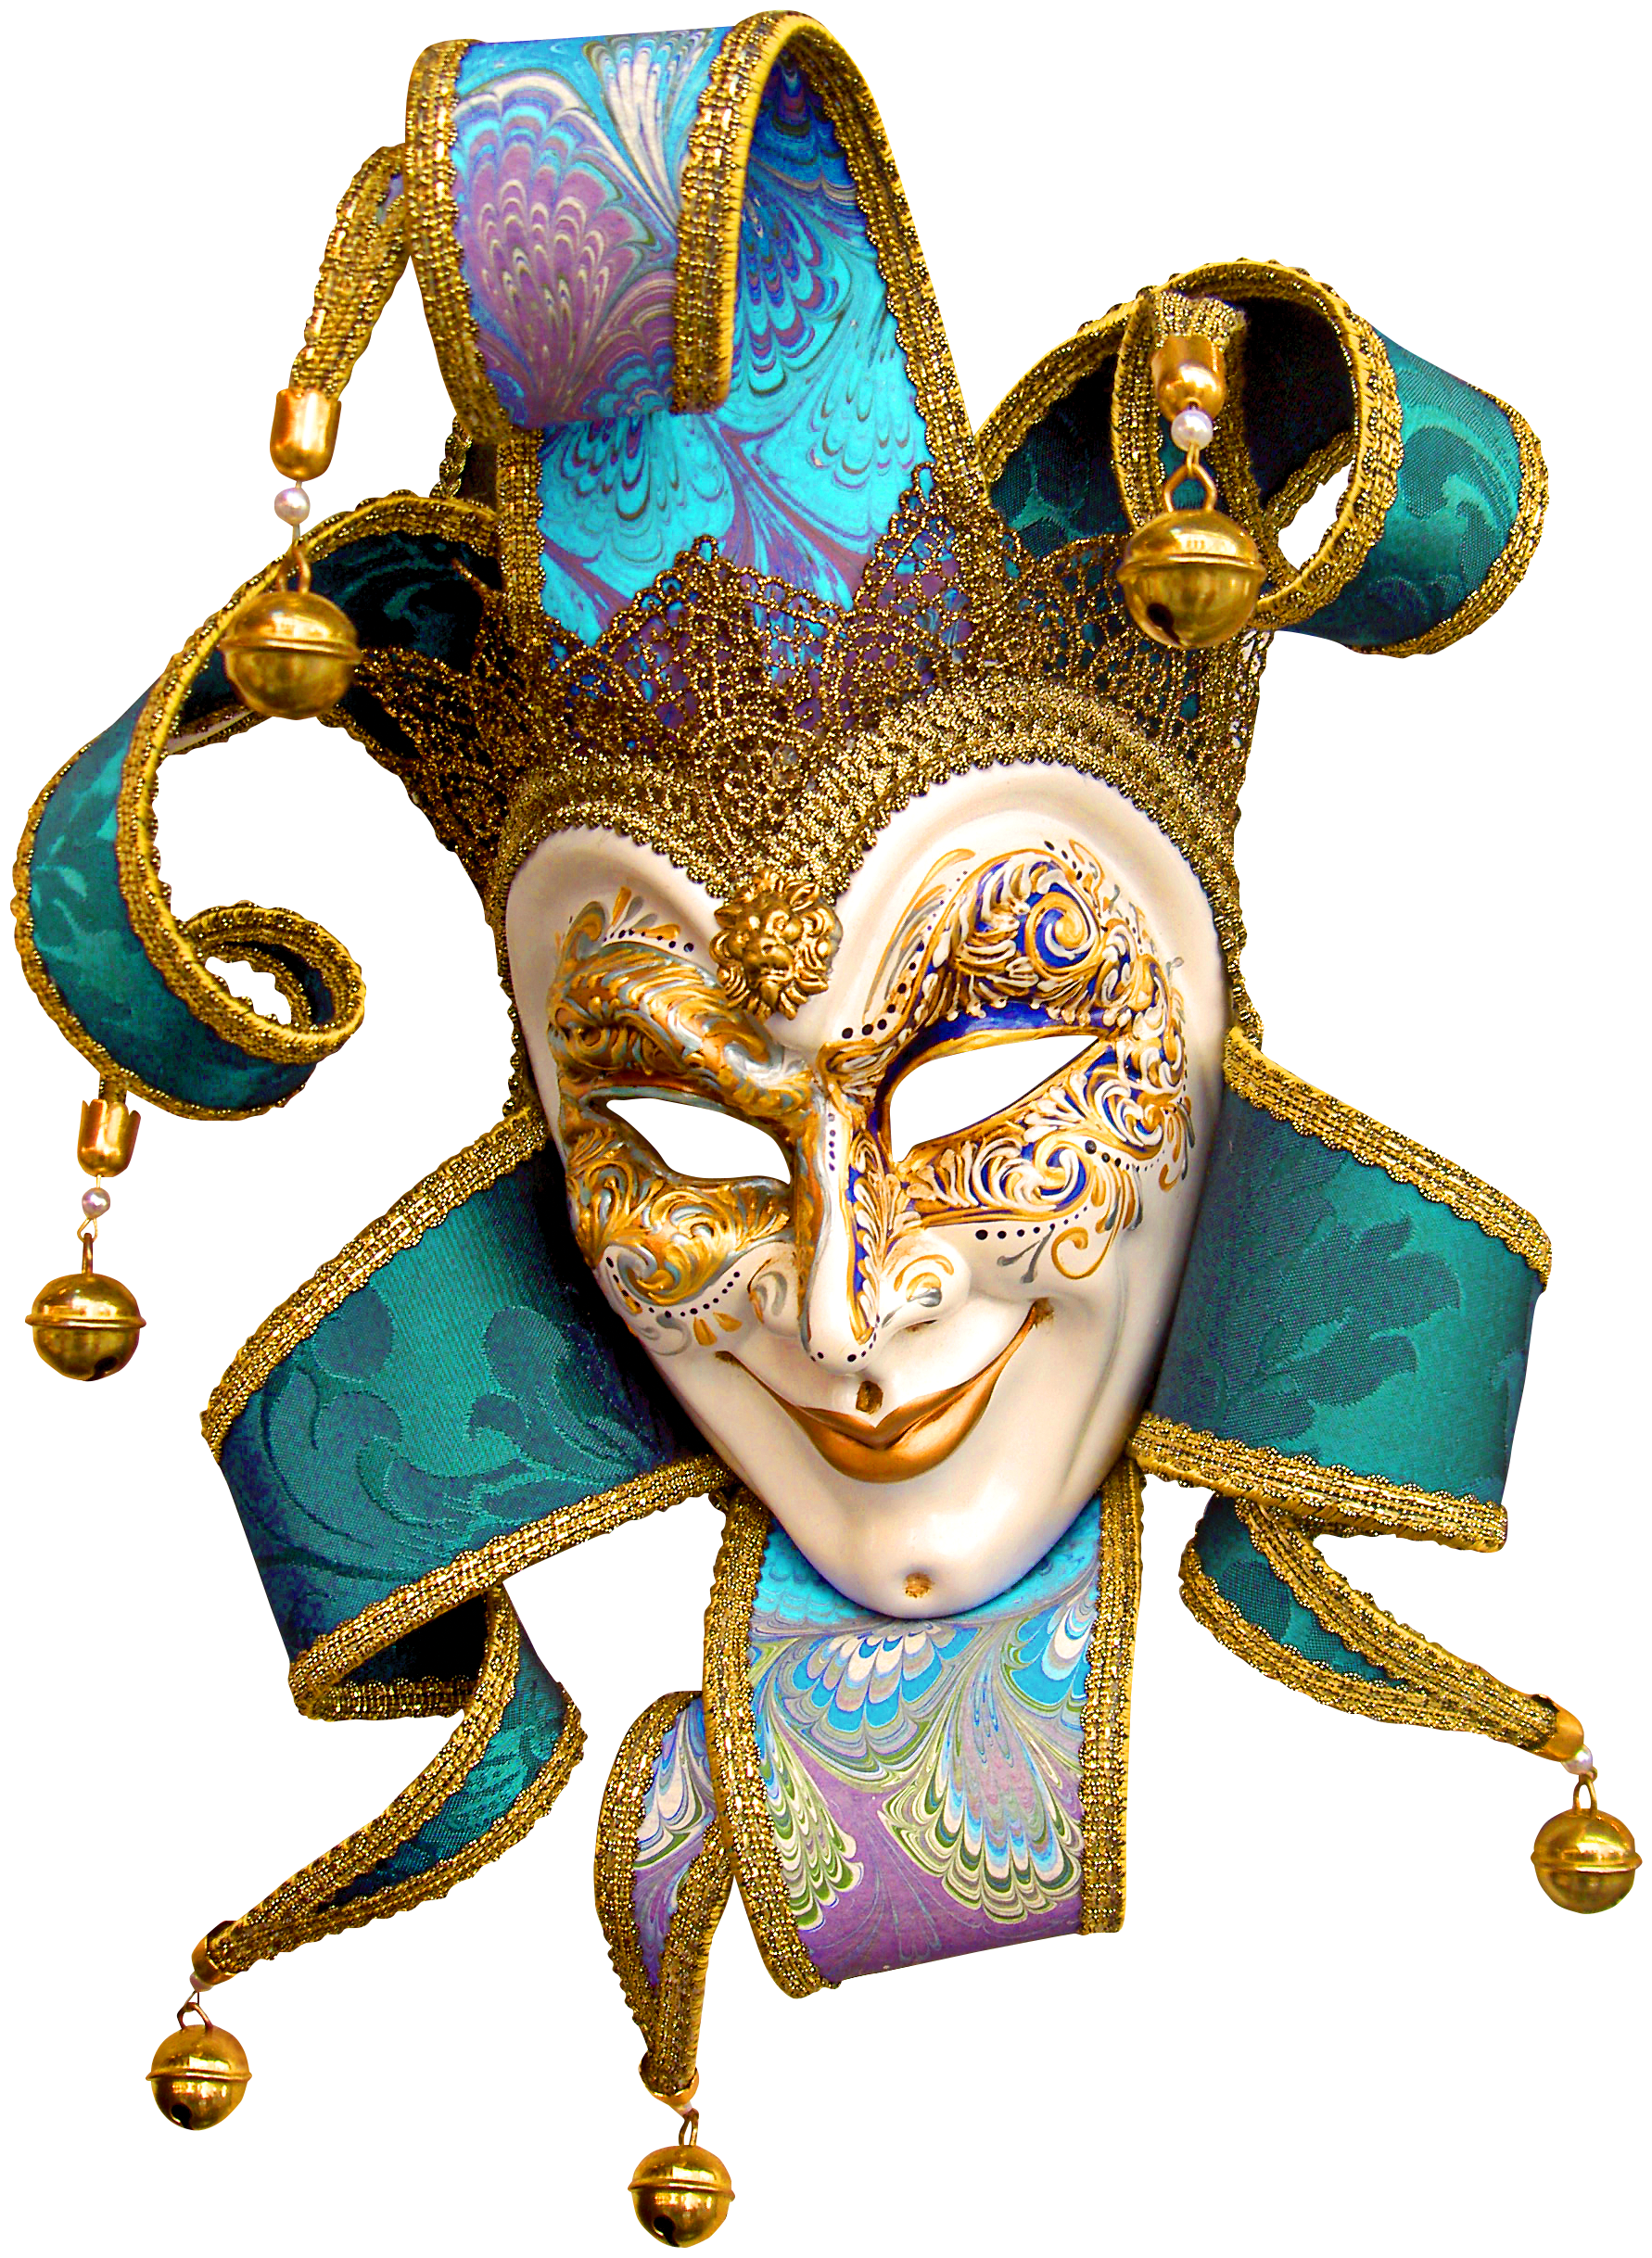 Mardi Venice Ball Monster Carnival Masquerade Of PNG Image